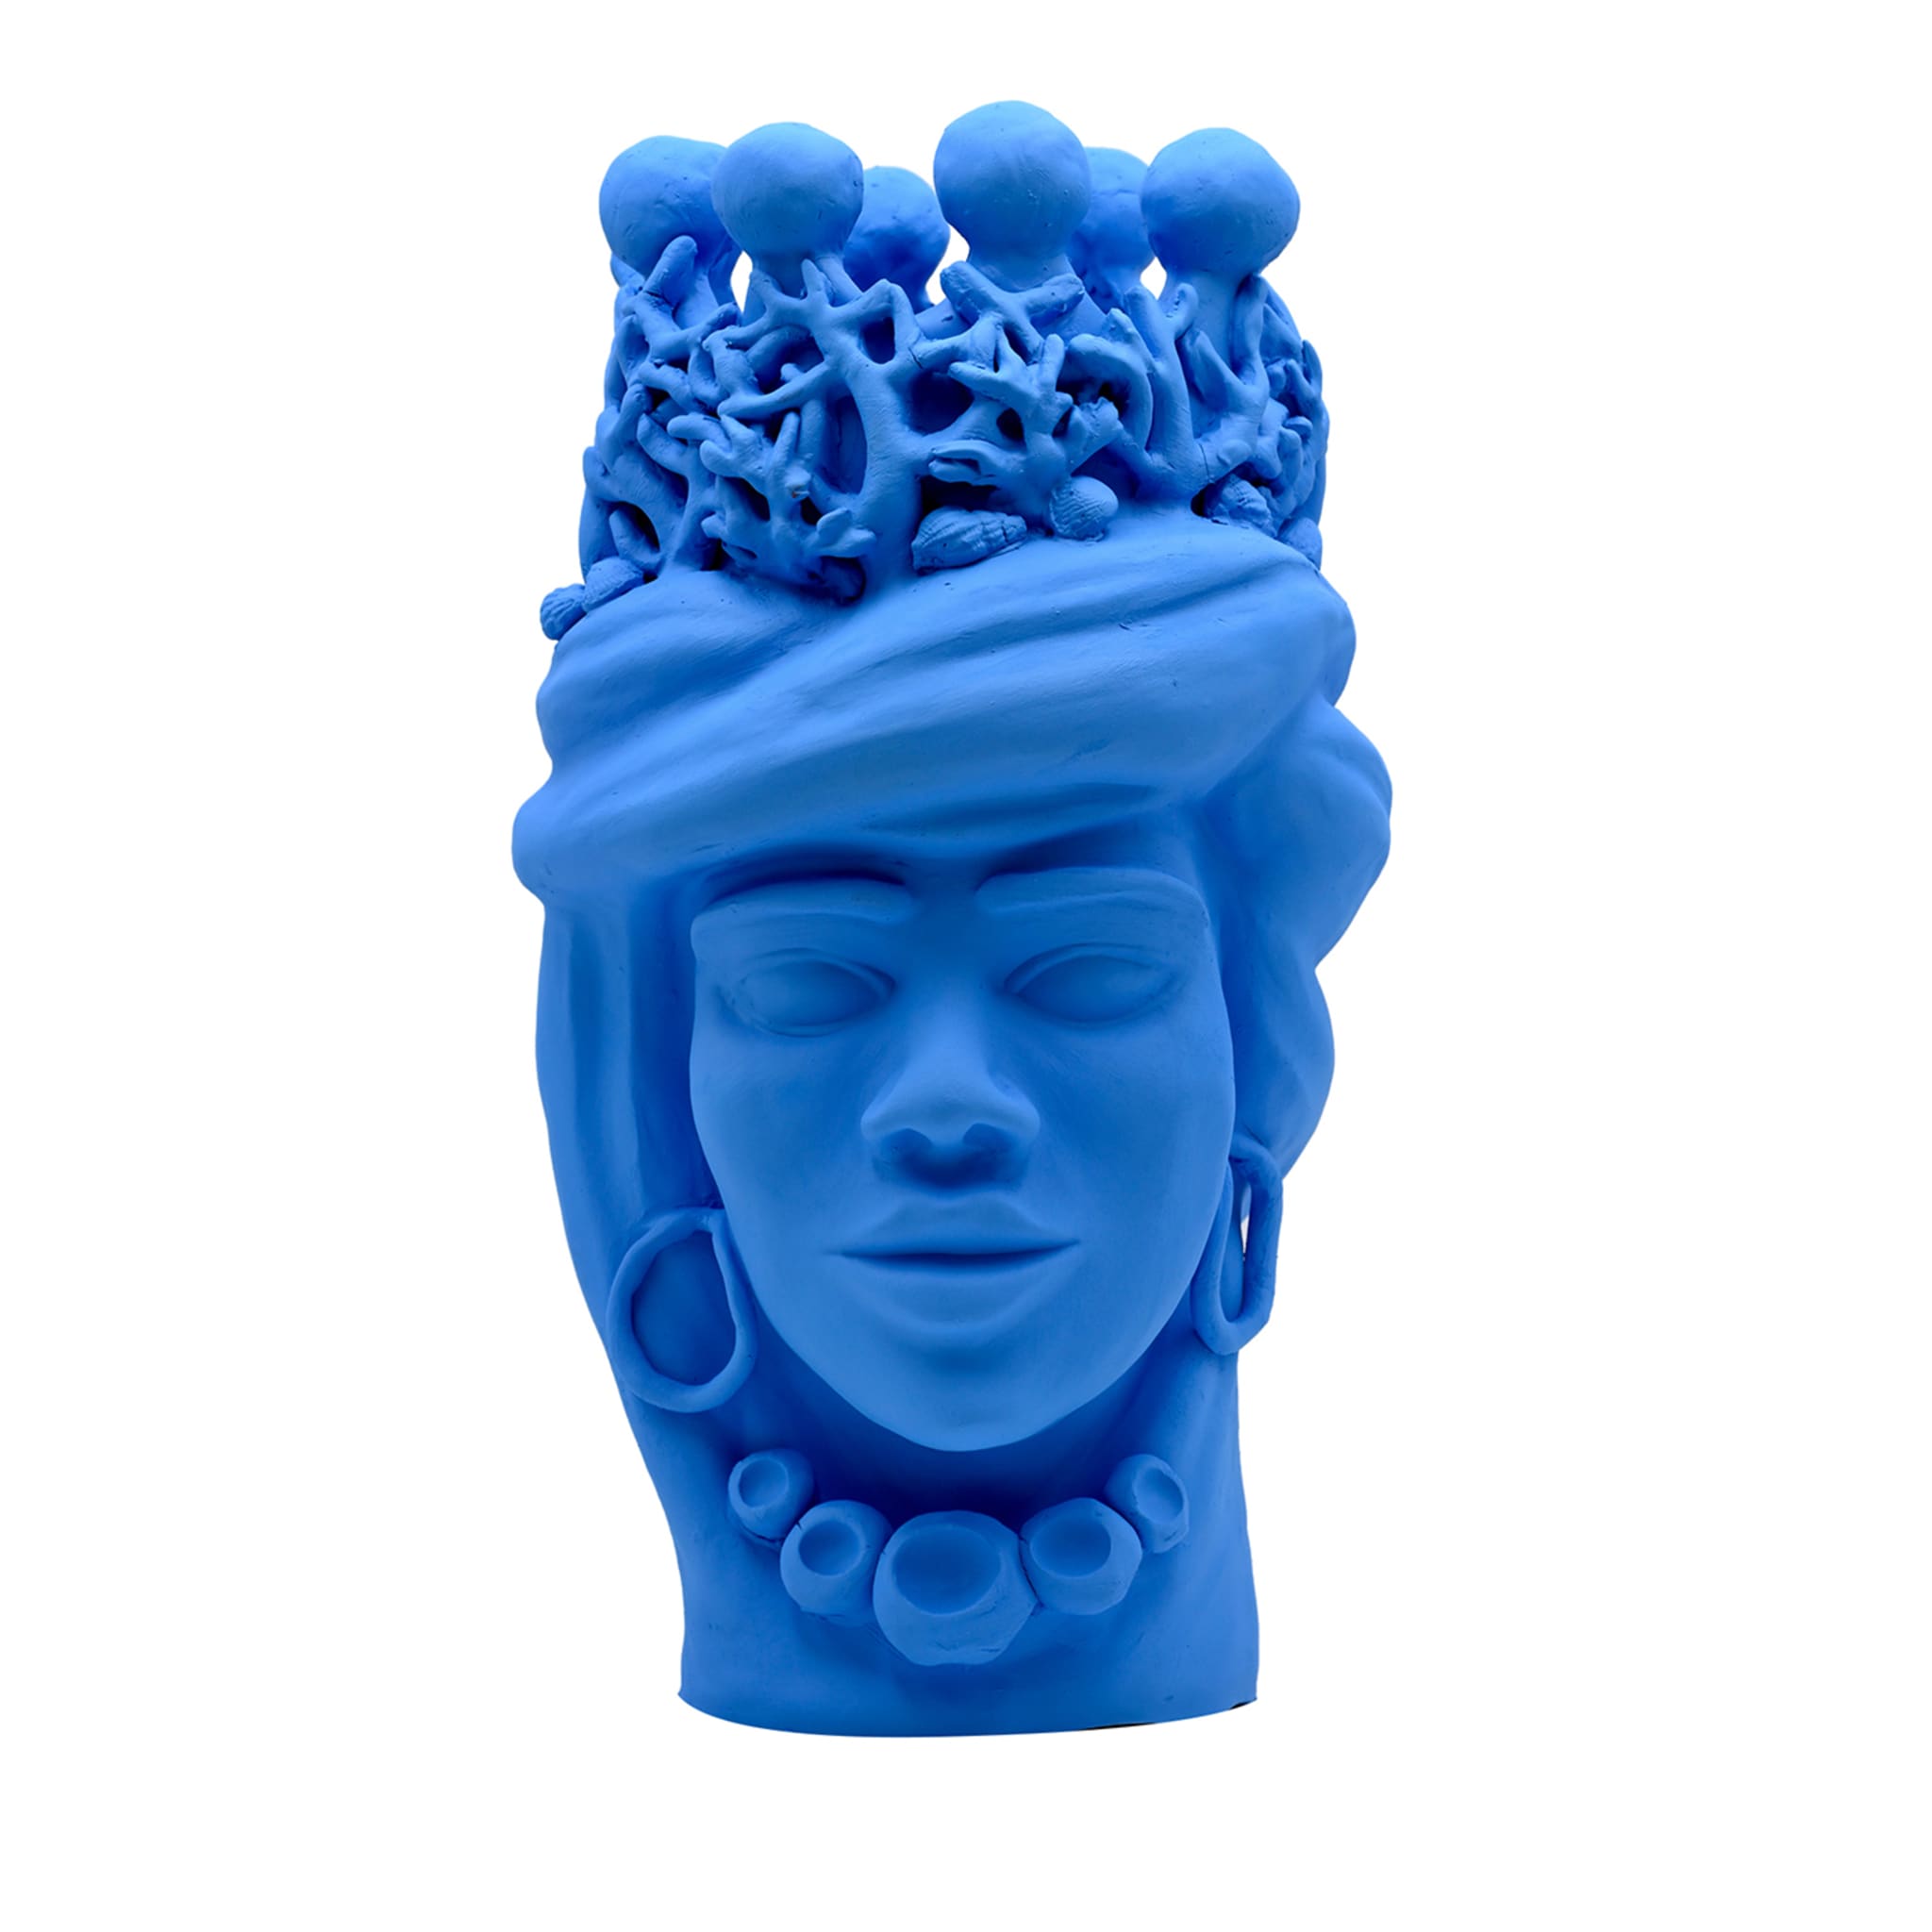 Moor's Head Light Blue Handmade Sculpture